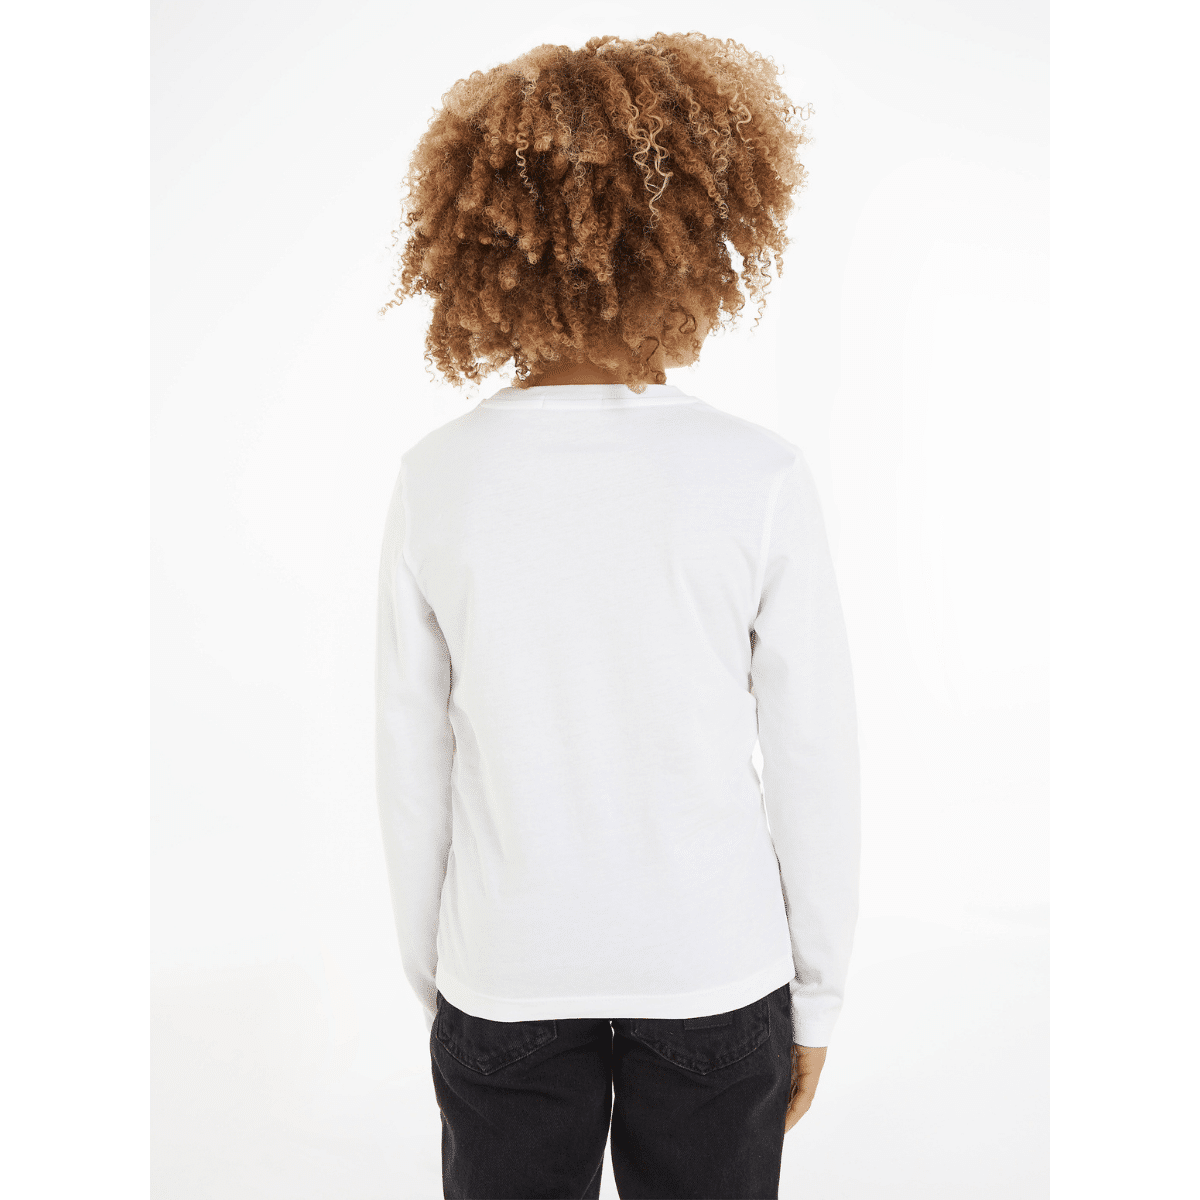 calvin klein childrens white tshirt with black logo on model back view